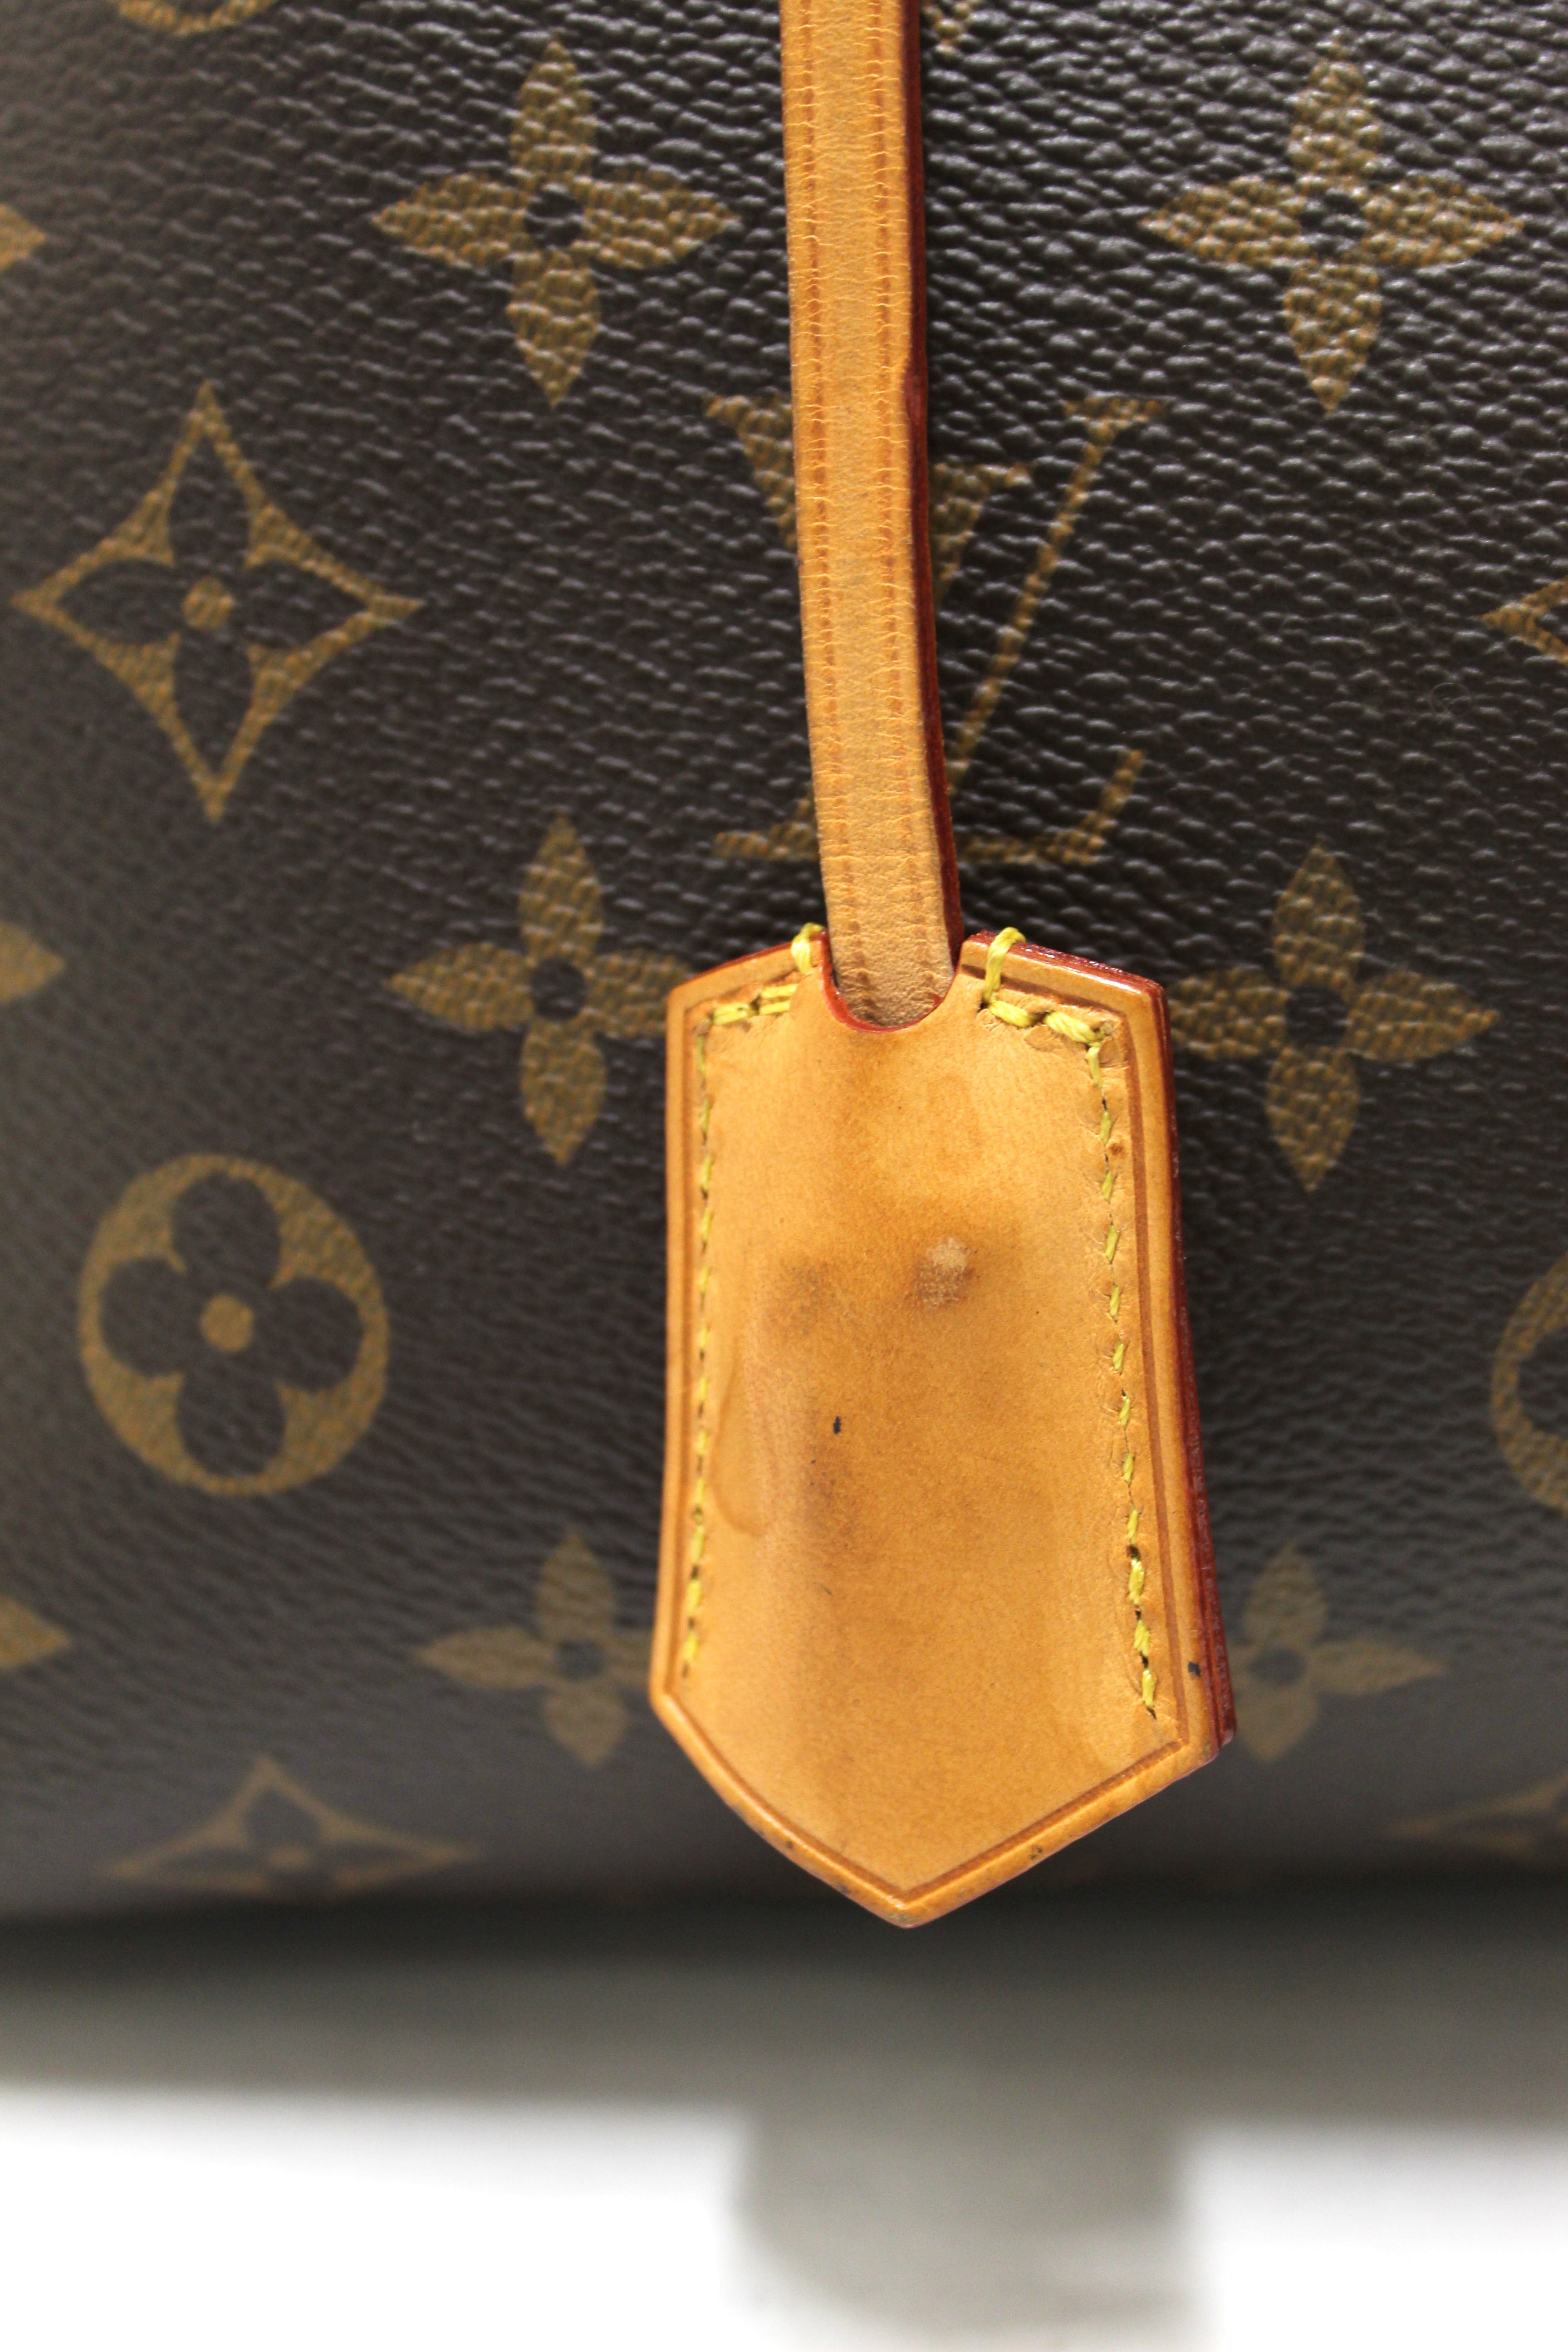 Authentic Louis Vuitton Limited Edition Monogram Lockit Chain Tote Bag